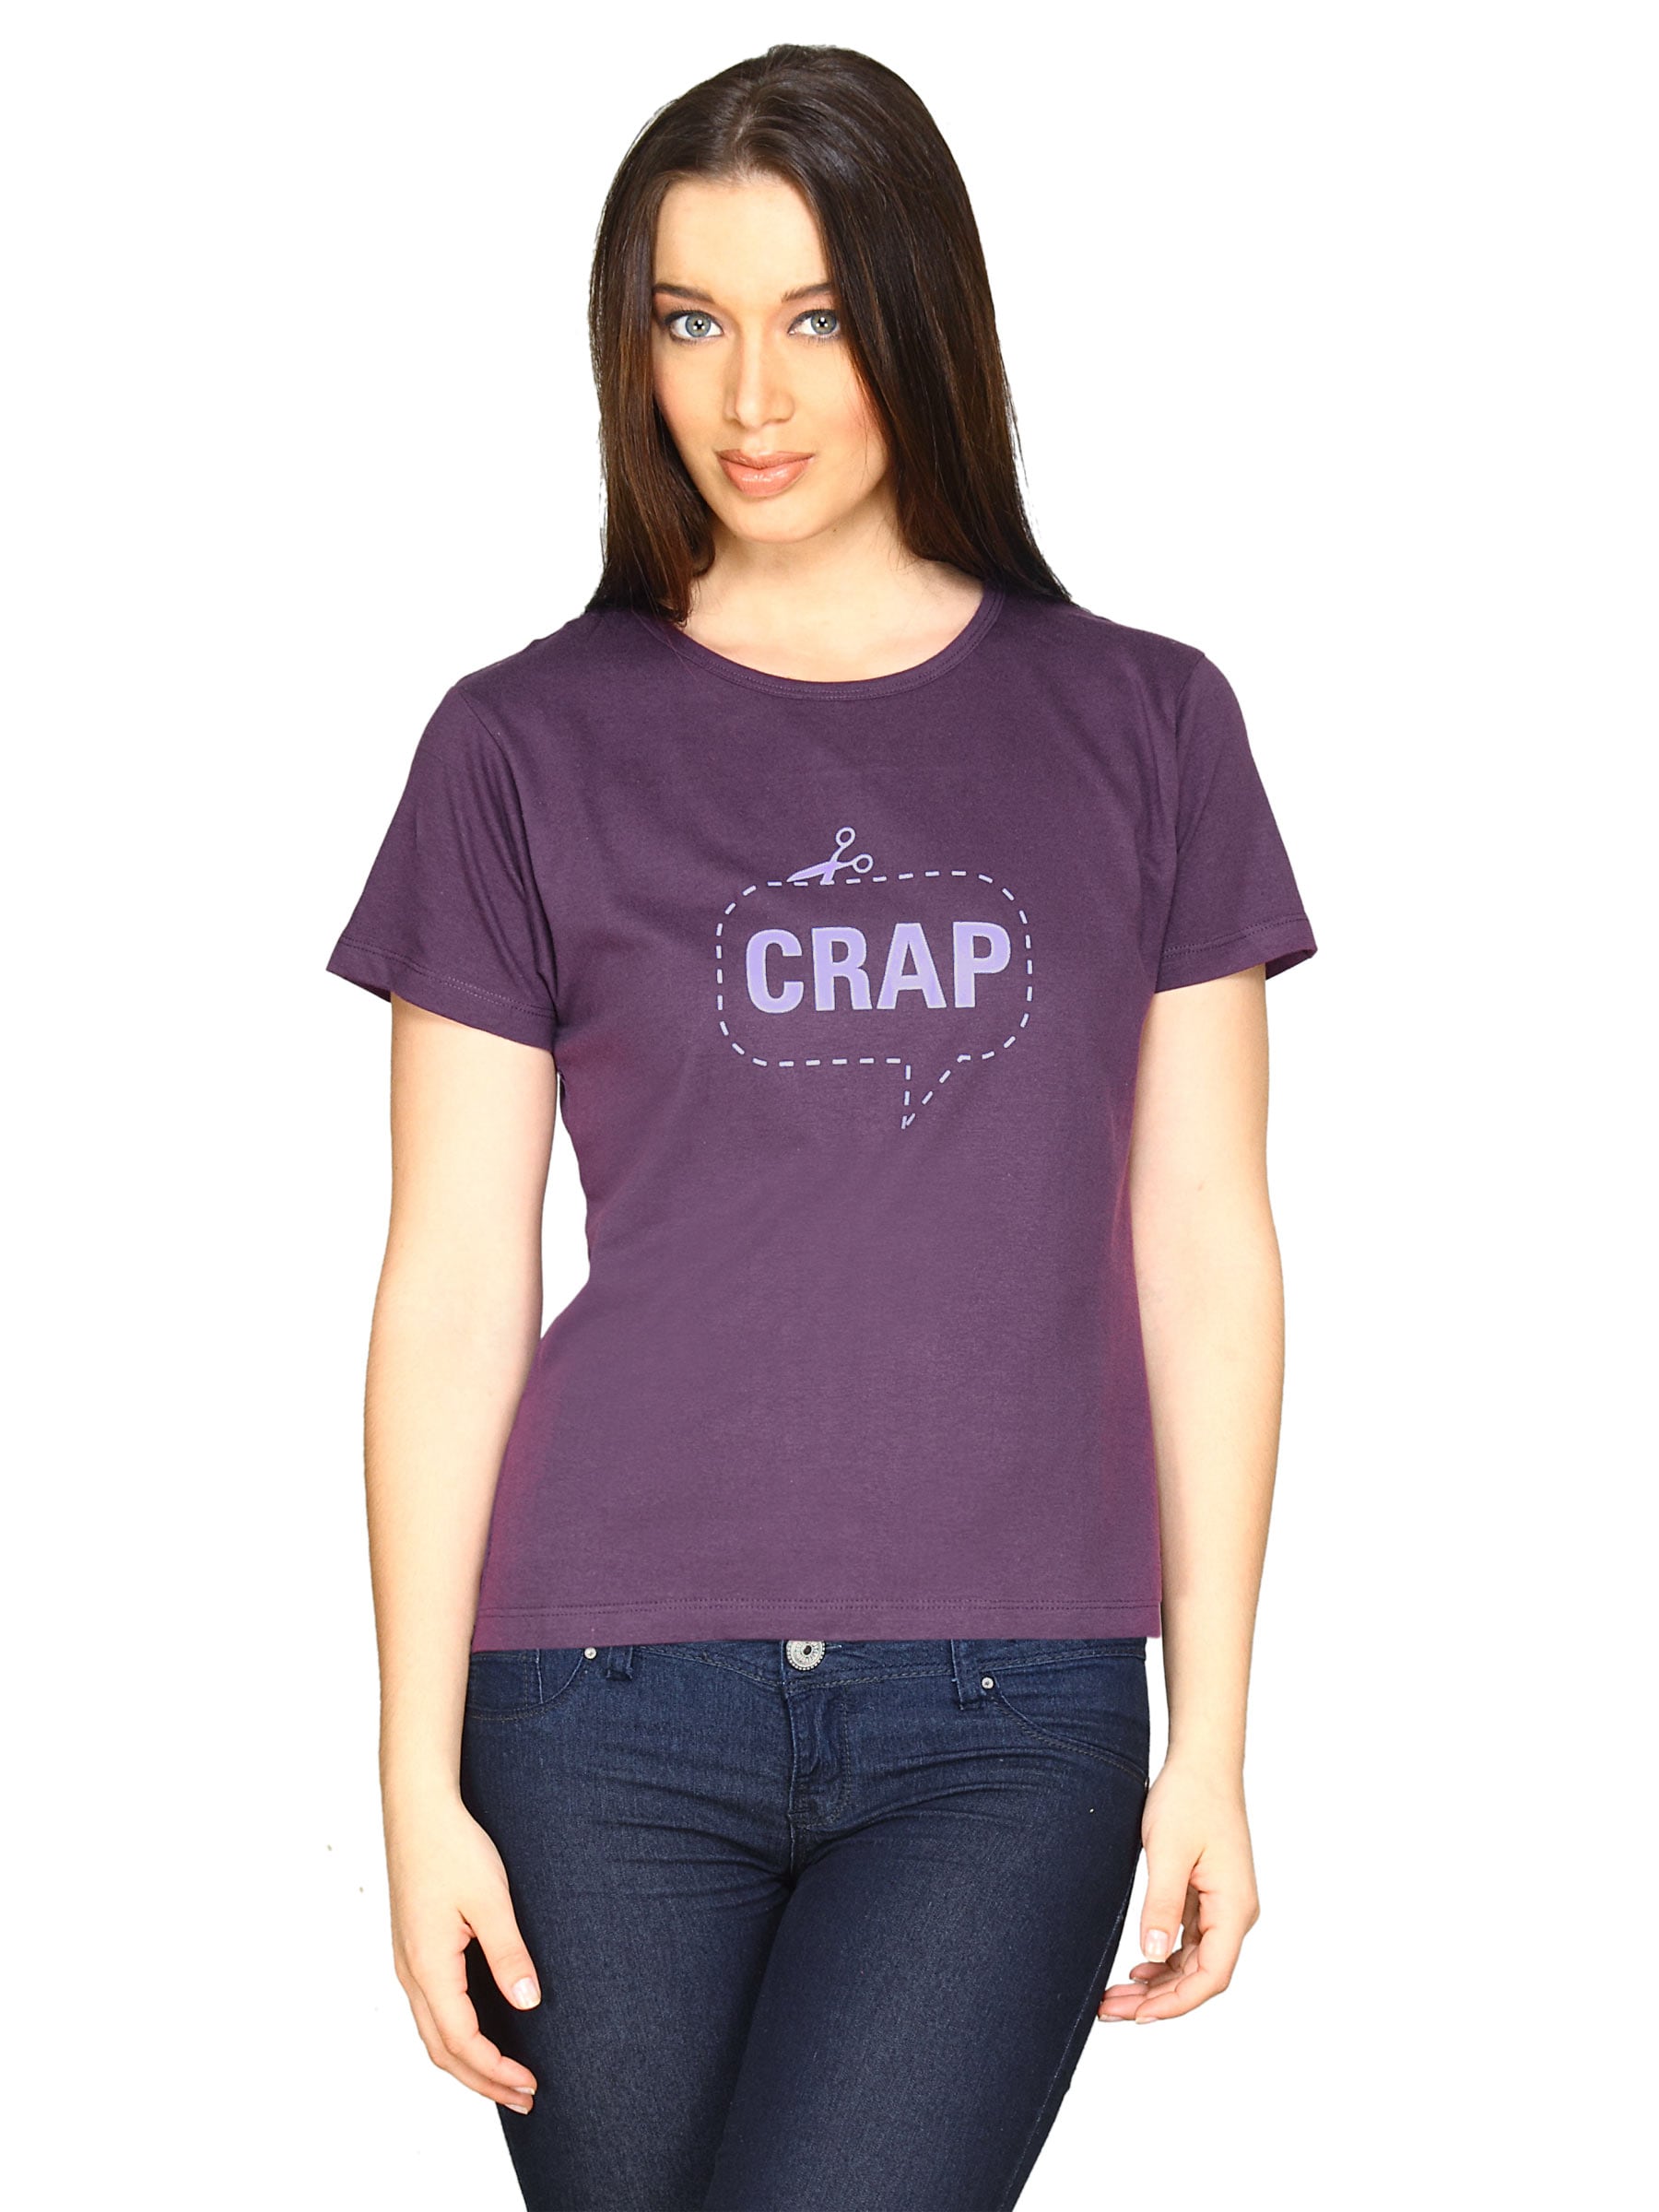 Tantra Women's Cut Crap Purple T-shirt